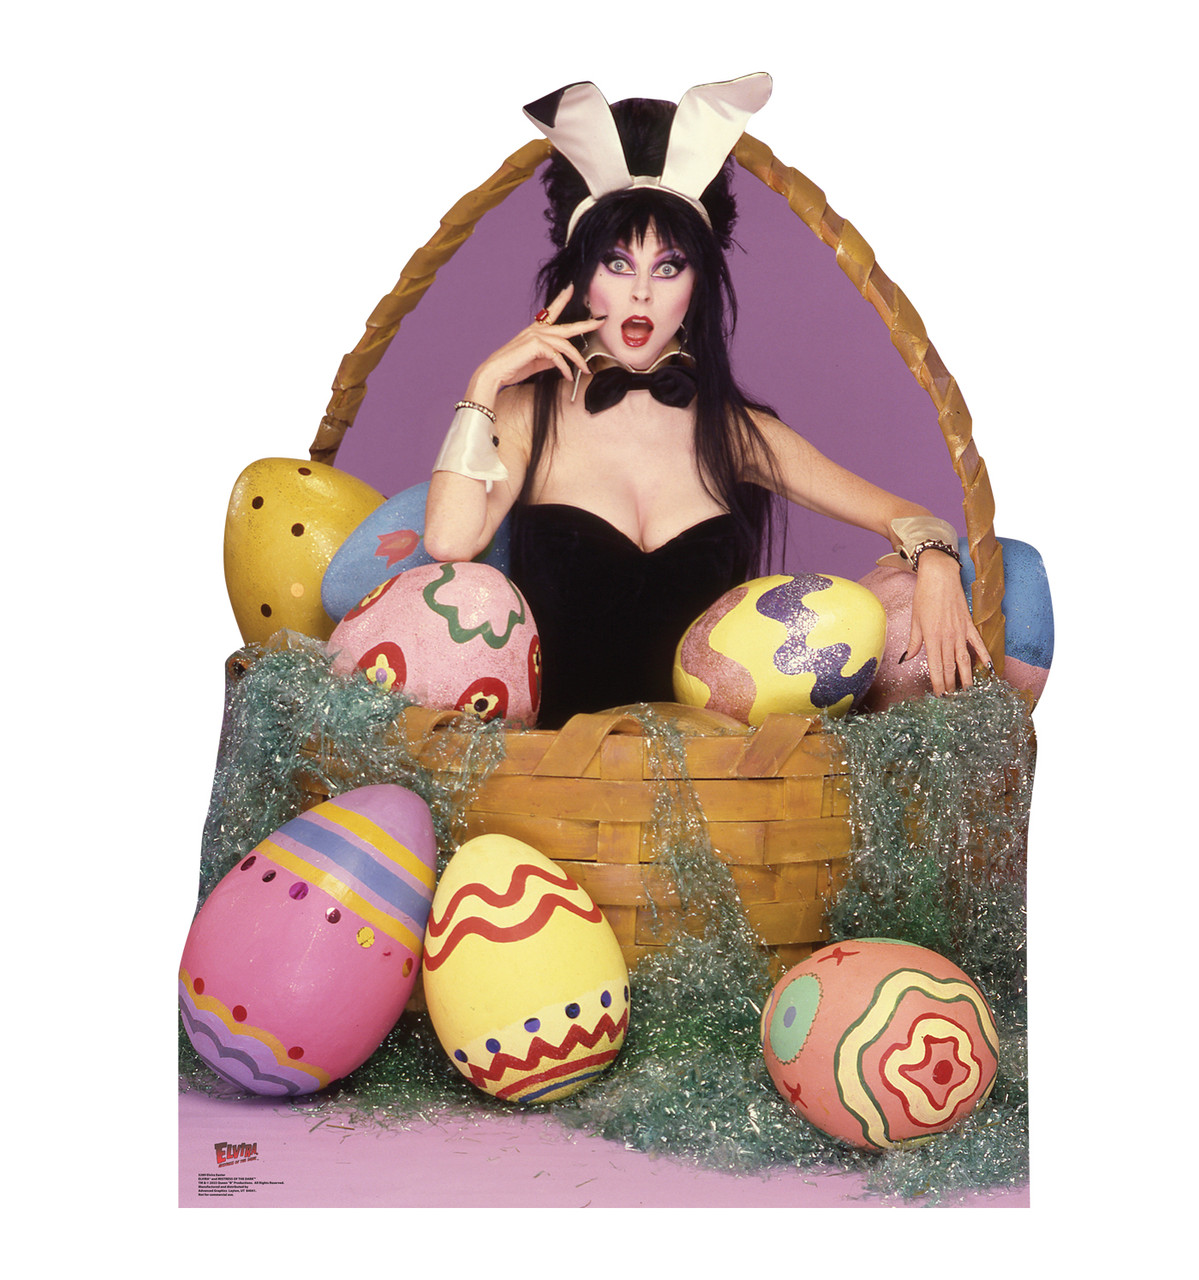 Life-size cardboard standee of Elvira Easter.